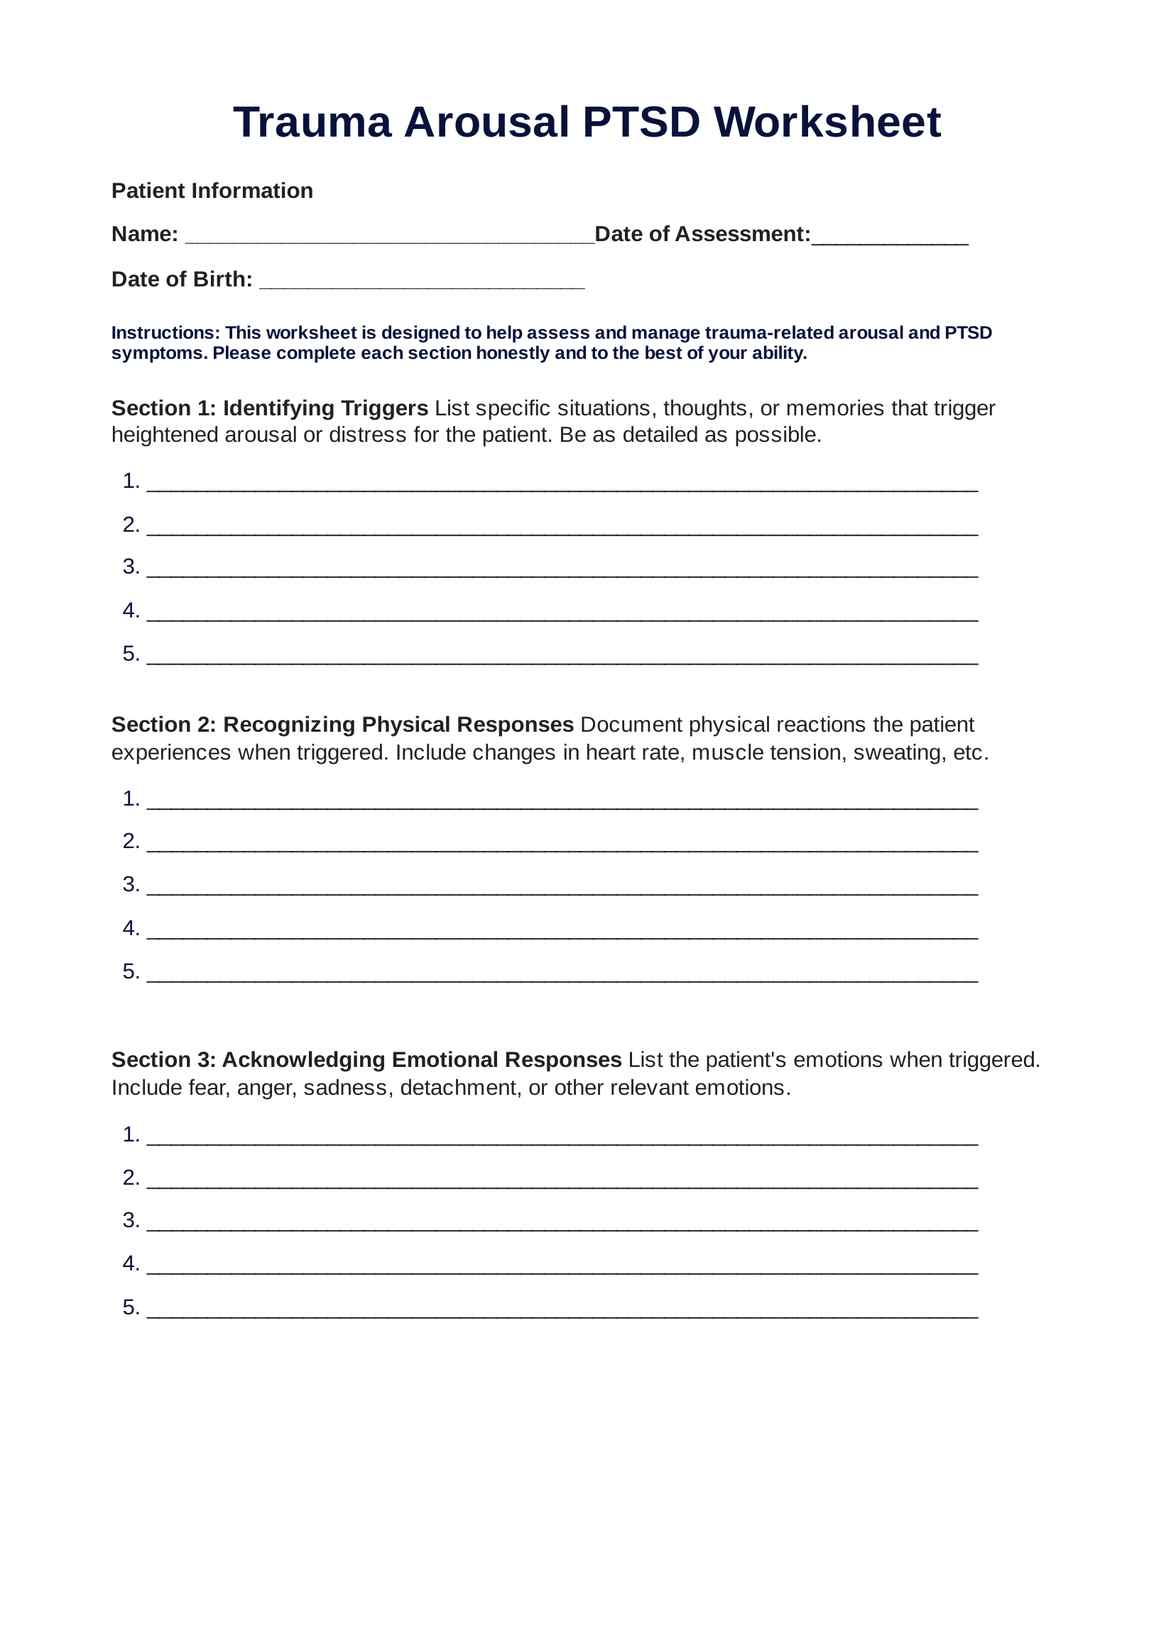 Trauma Arousal PTSD Worksheet PDF Example